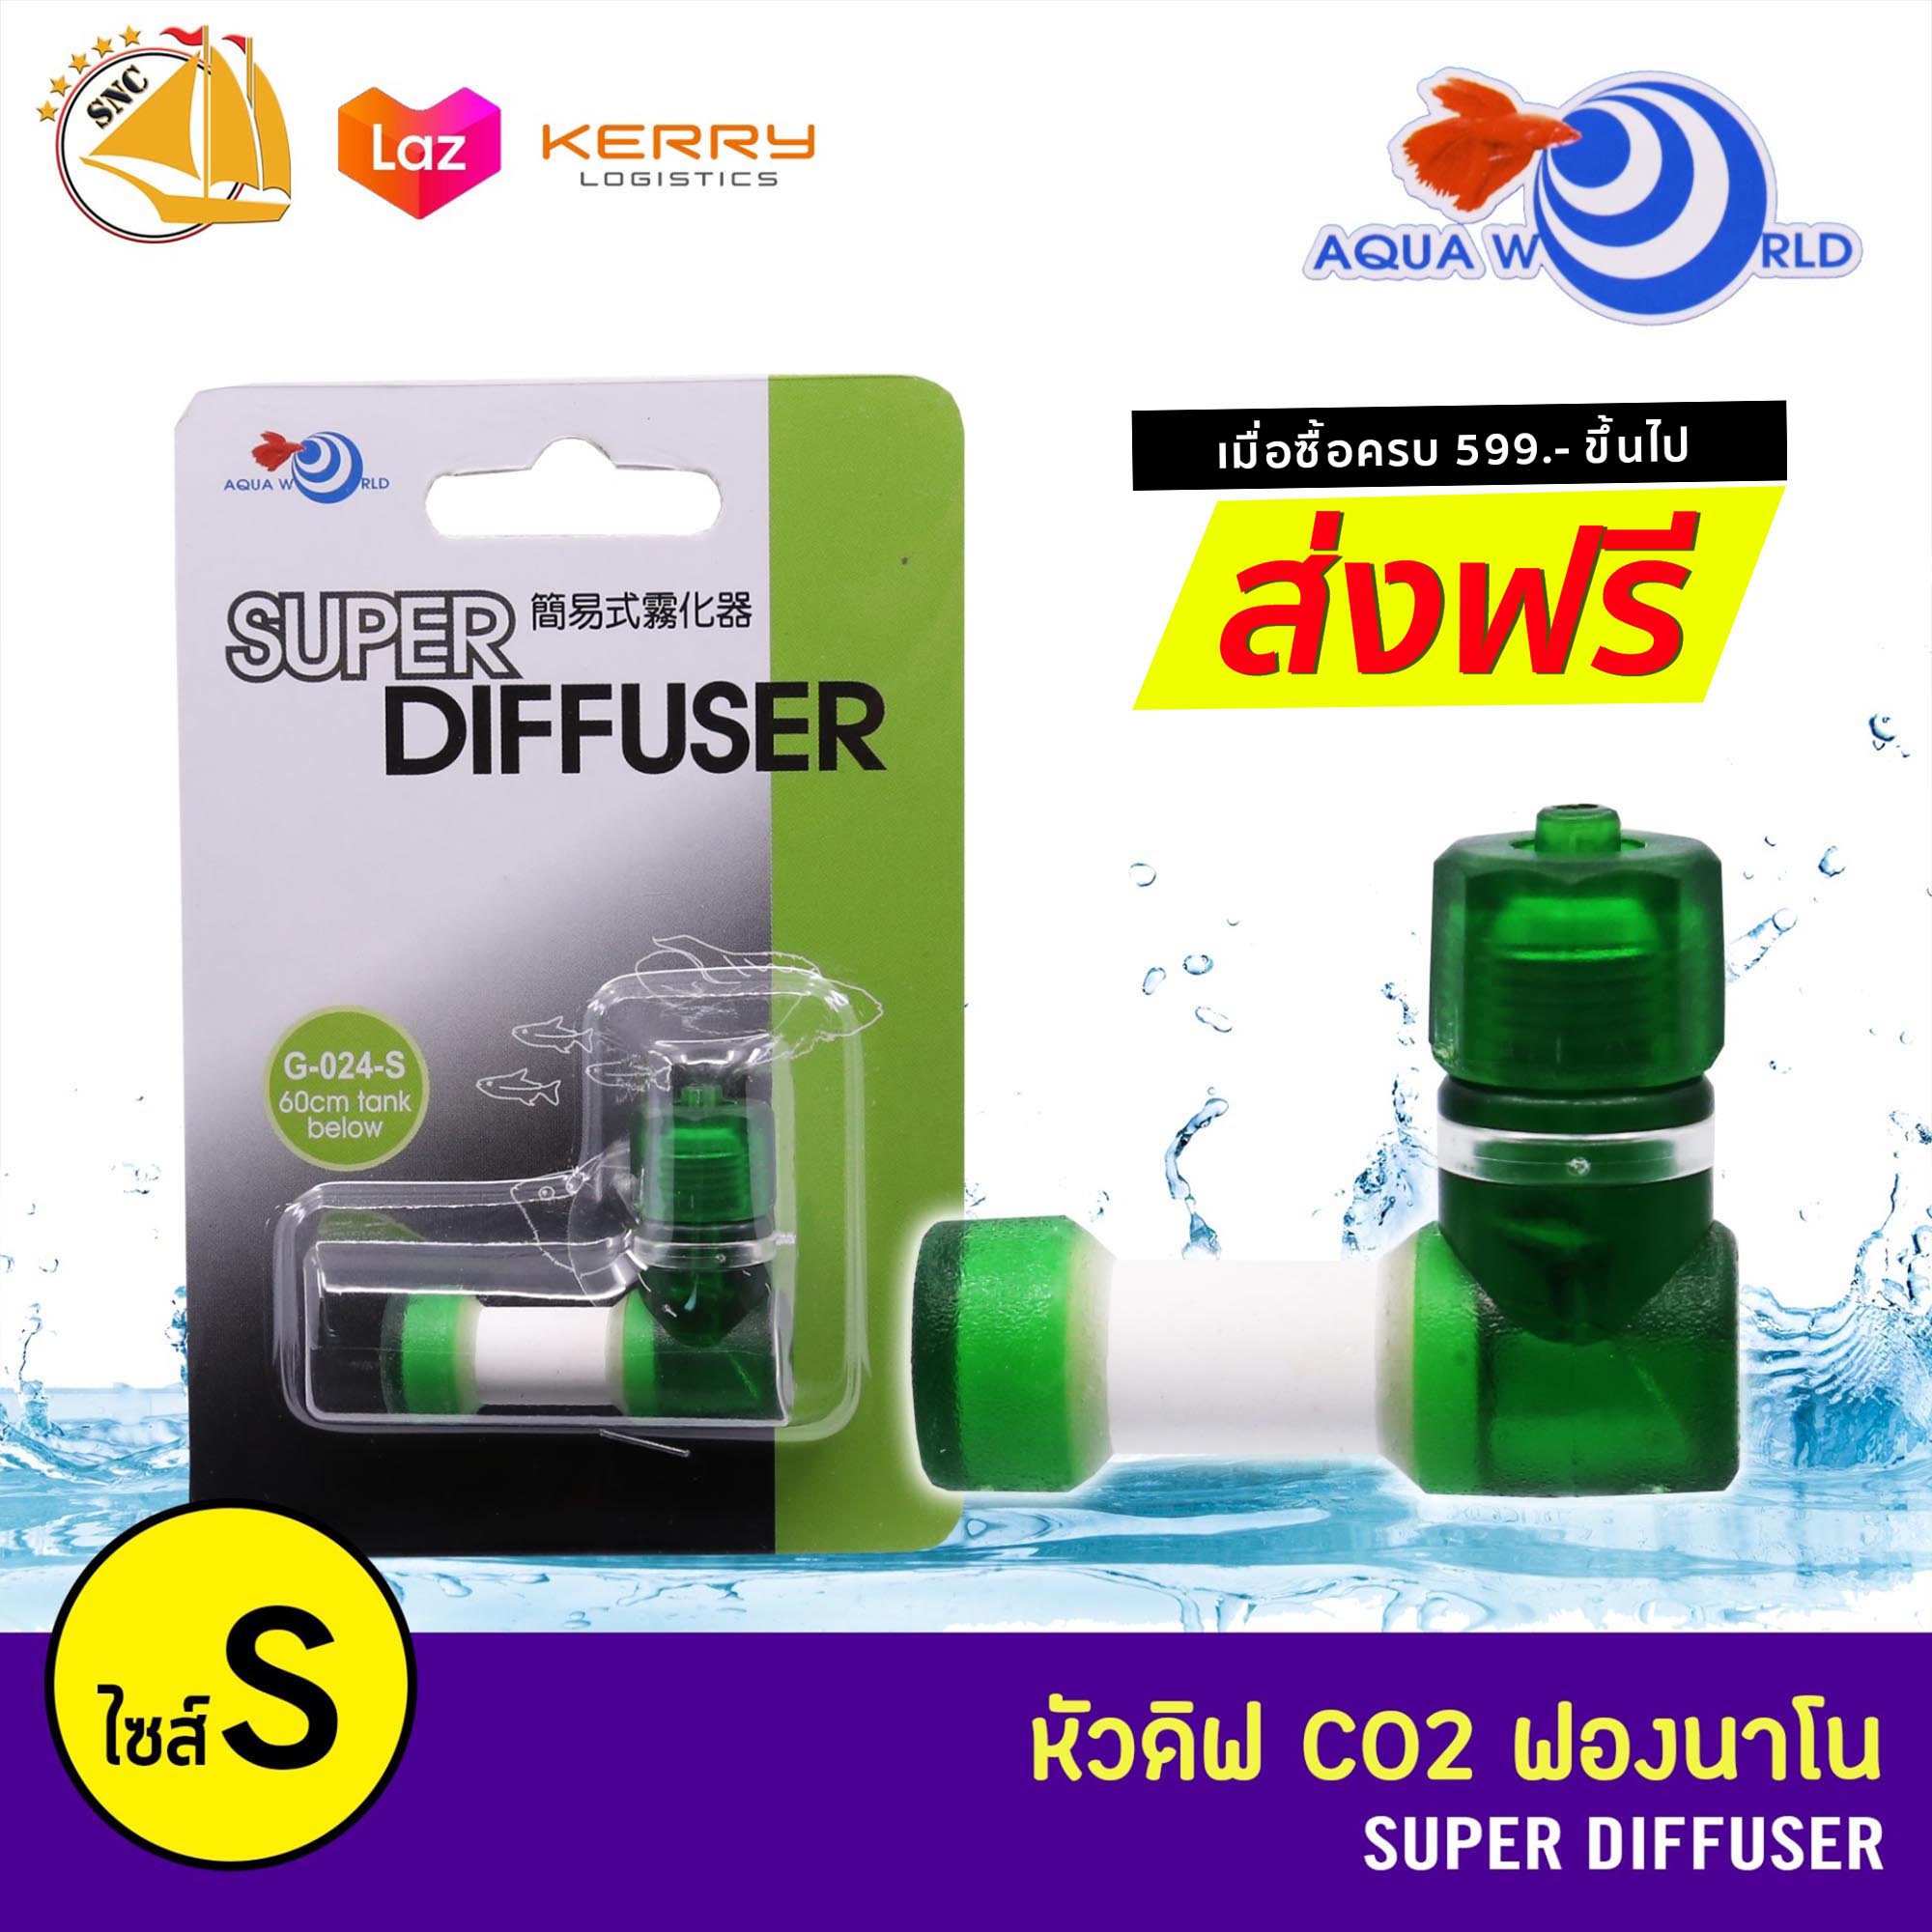 Aqua World Super Diffuser หัวดิฟ CO2 ฟองนาโน G-024-S